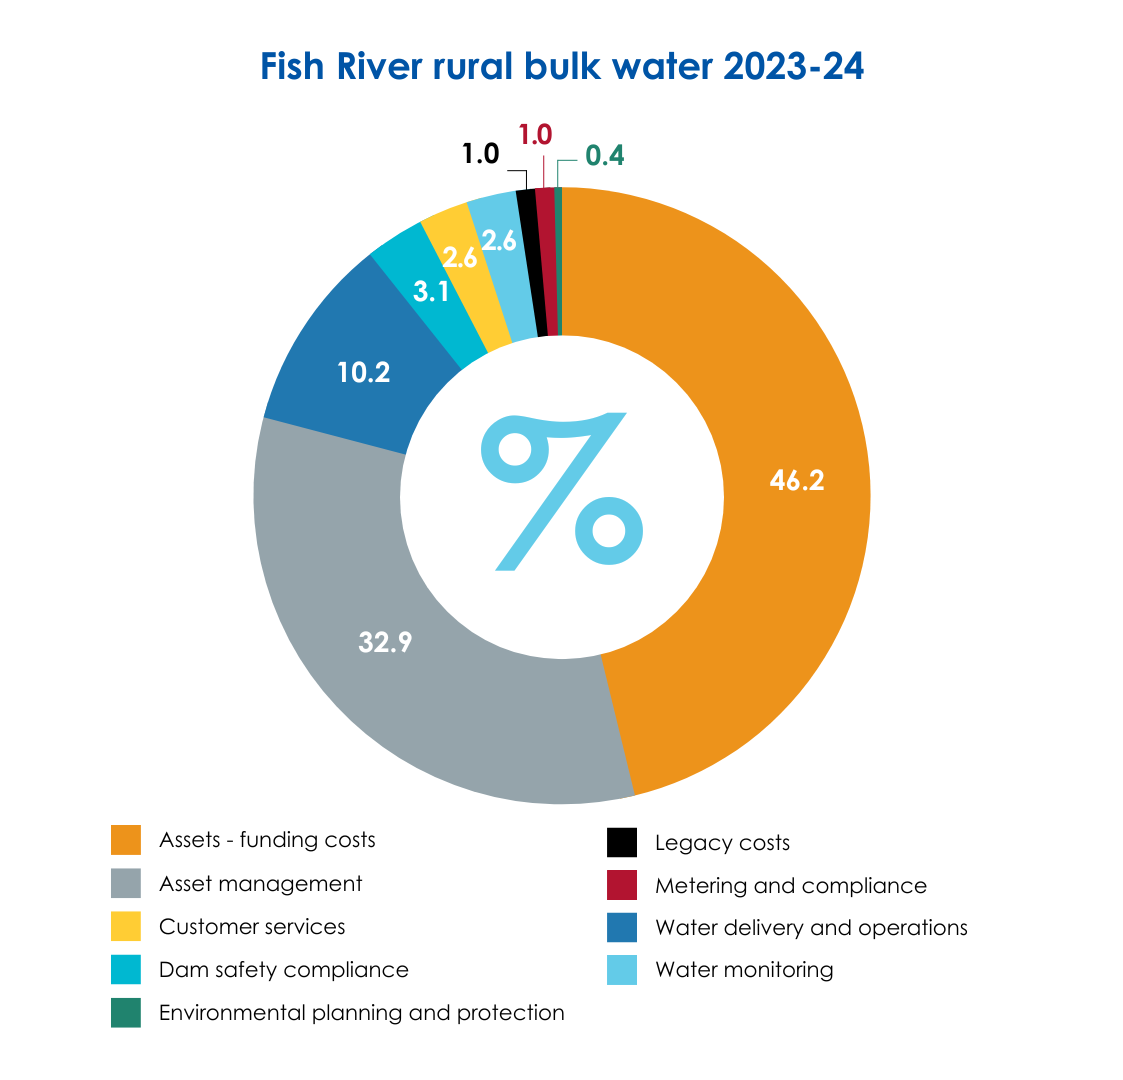 Fish River rural bulk water revenue 23-24 pie chart